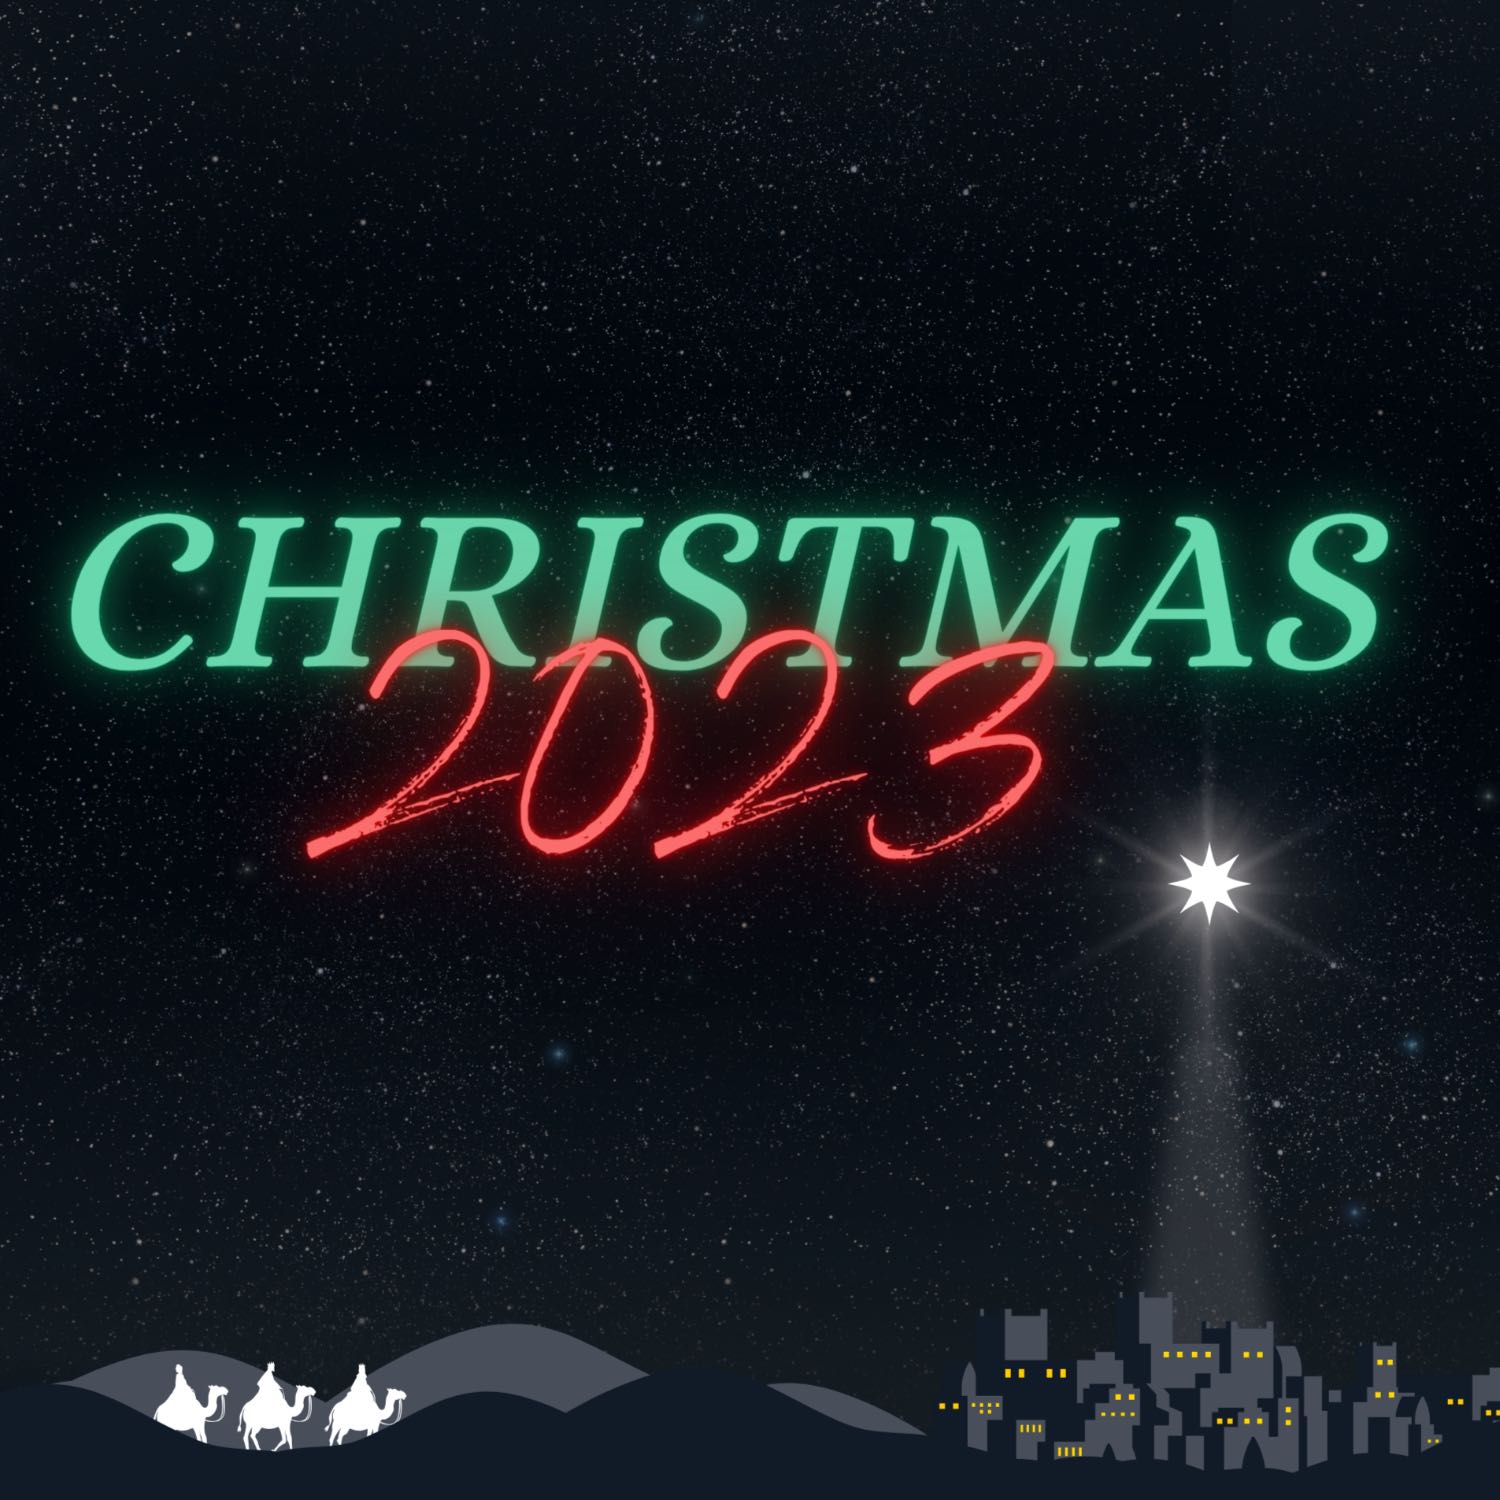 3 - Christmas 2023 - A New Kingdom